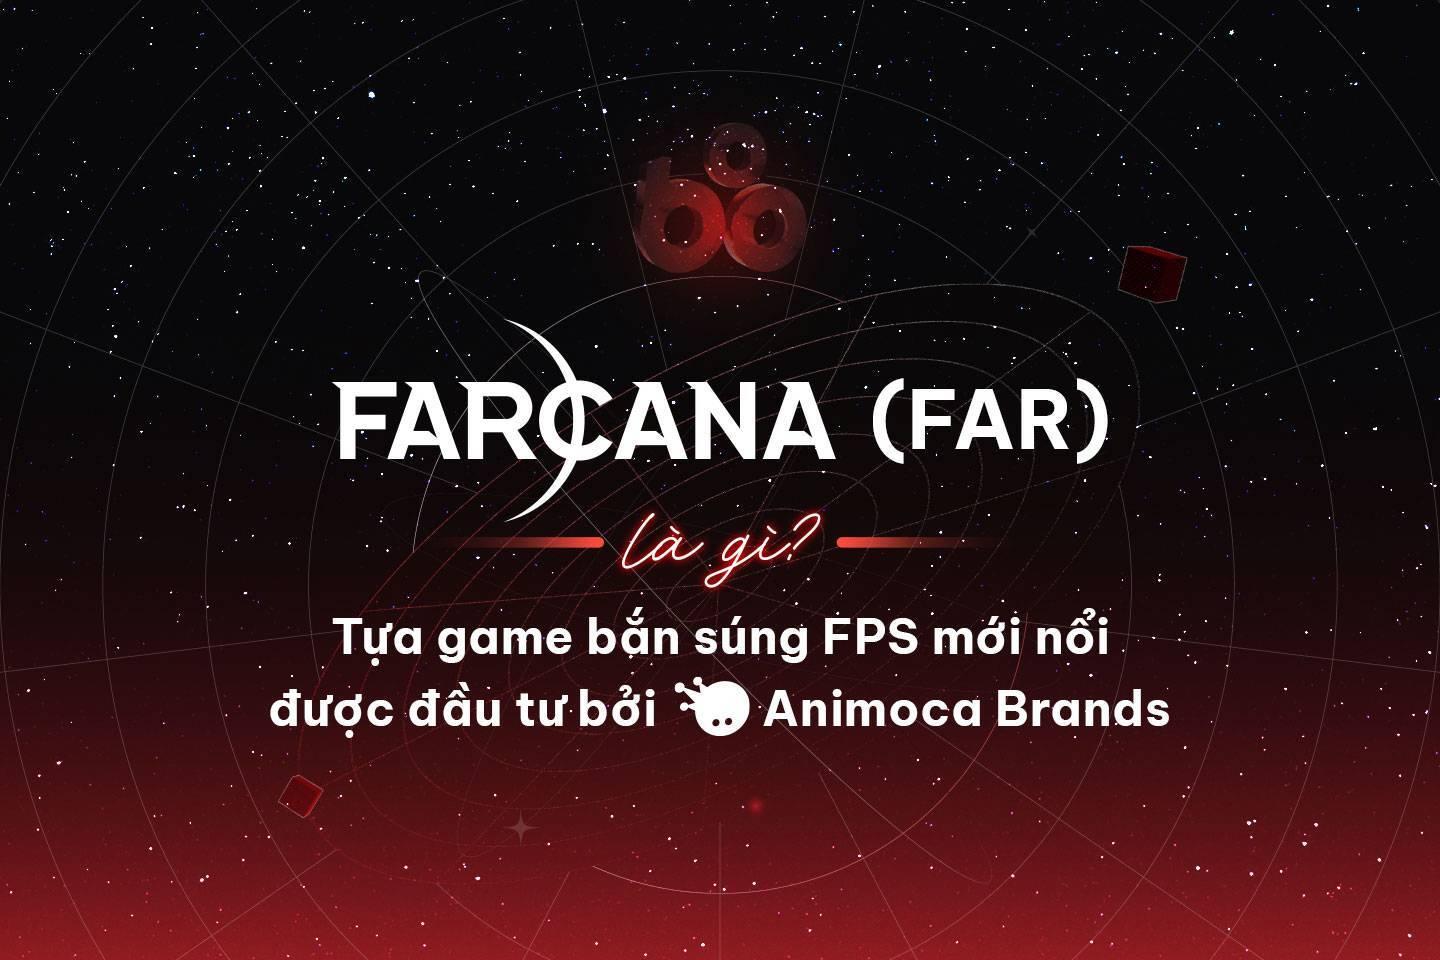 farcana-far-la-gi-tua-game-ban-sung-fps-moi-noi-duoc-dau-tu-boi-animoca-brands